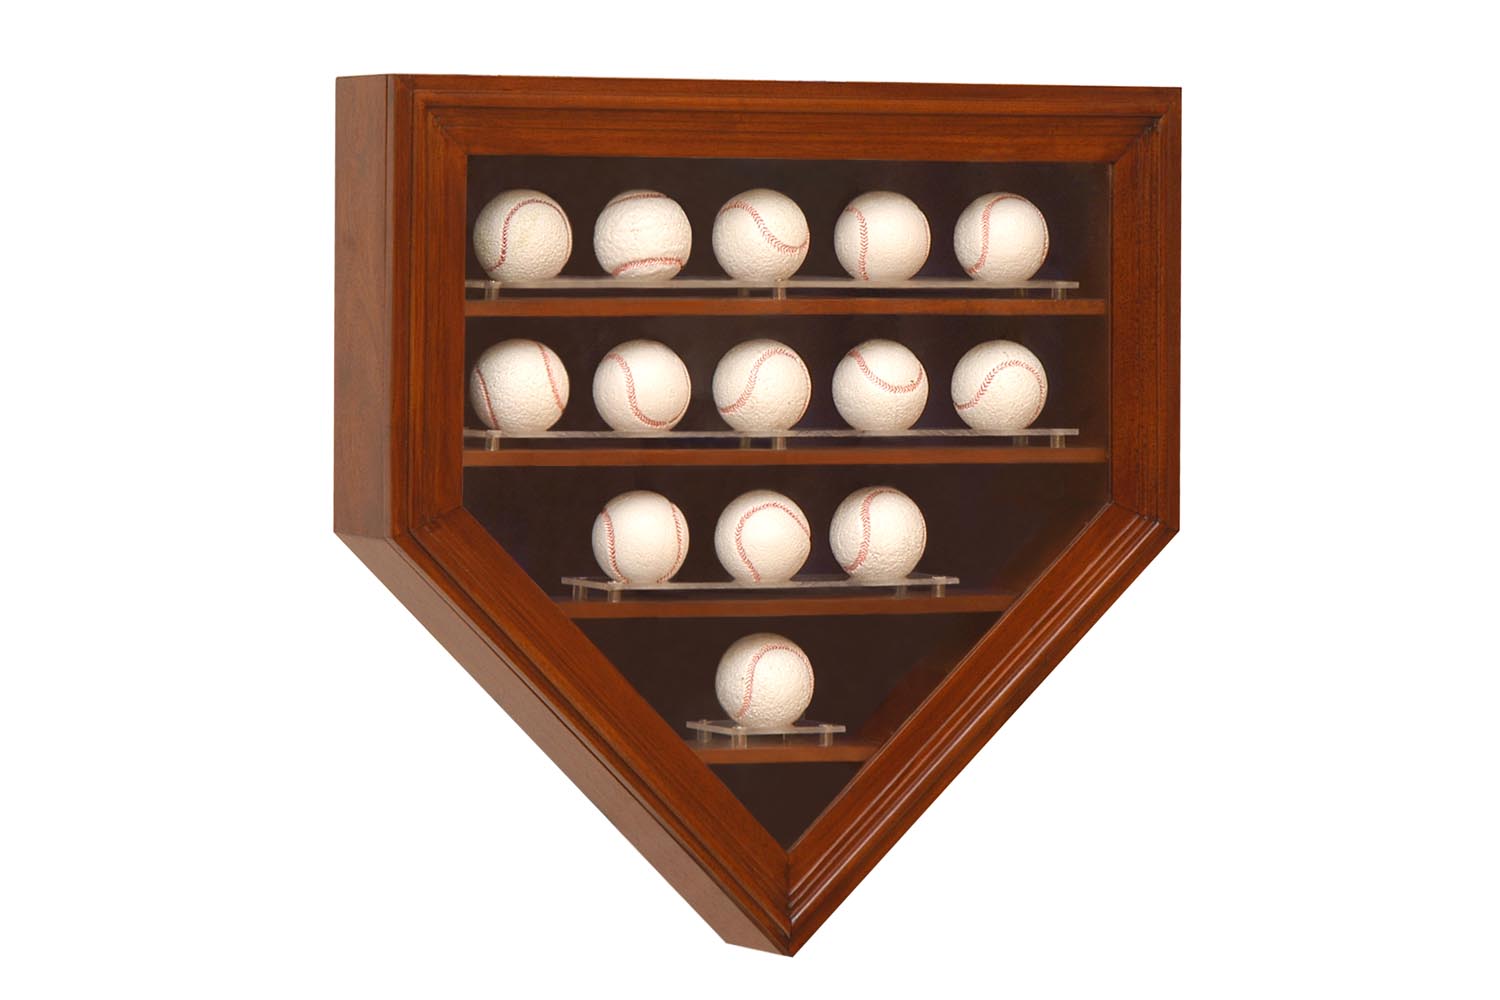 Baseball bat display case plans Plans DIY How to Make | available51glm